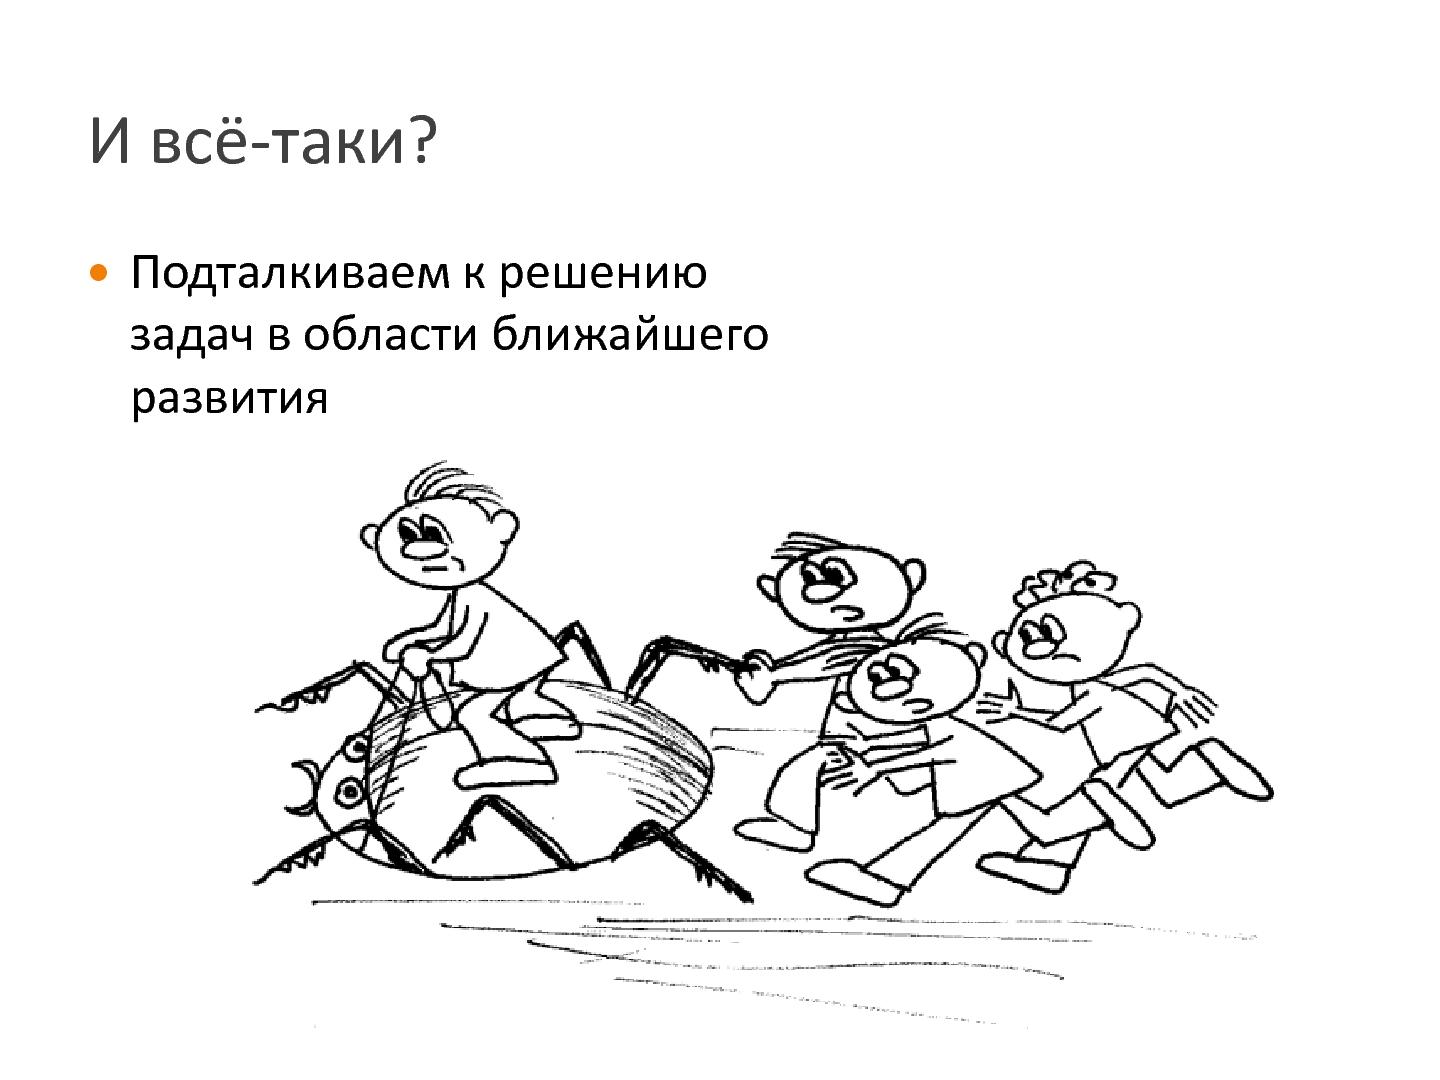 Файл:Люди середины (Владимир Железняк, SECR-2013).pdf